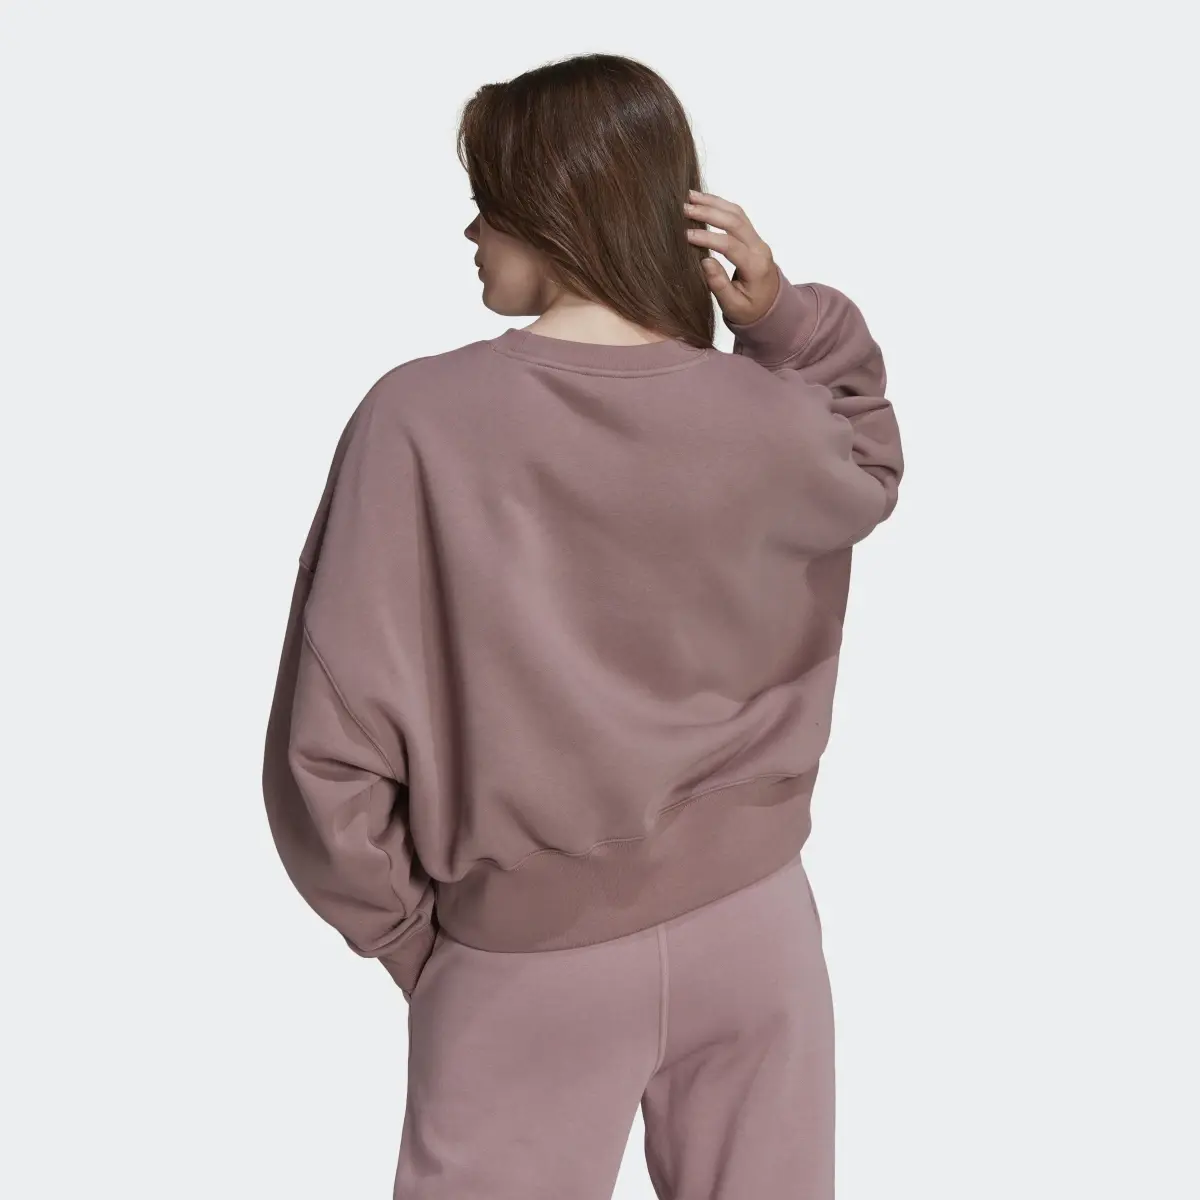 Adidas Sweatshirt em Fleece Adicolor Essentials. 3